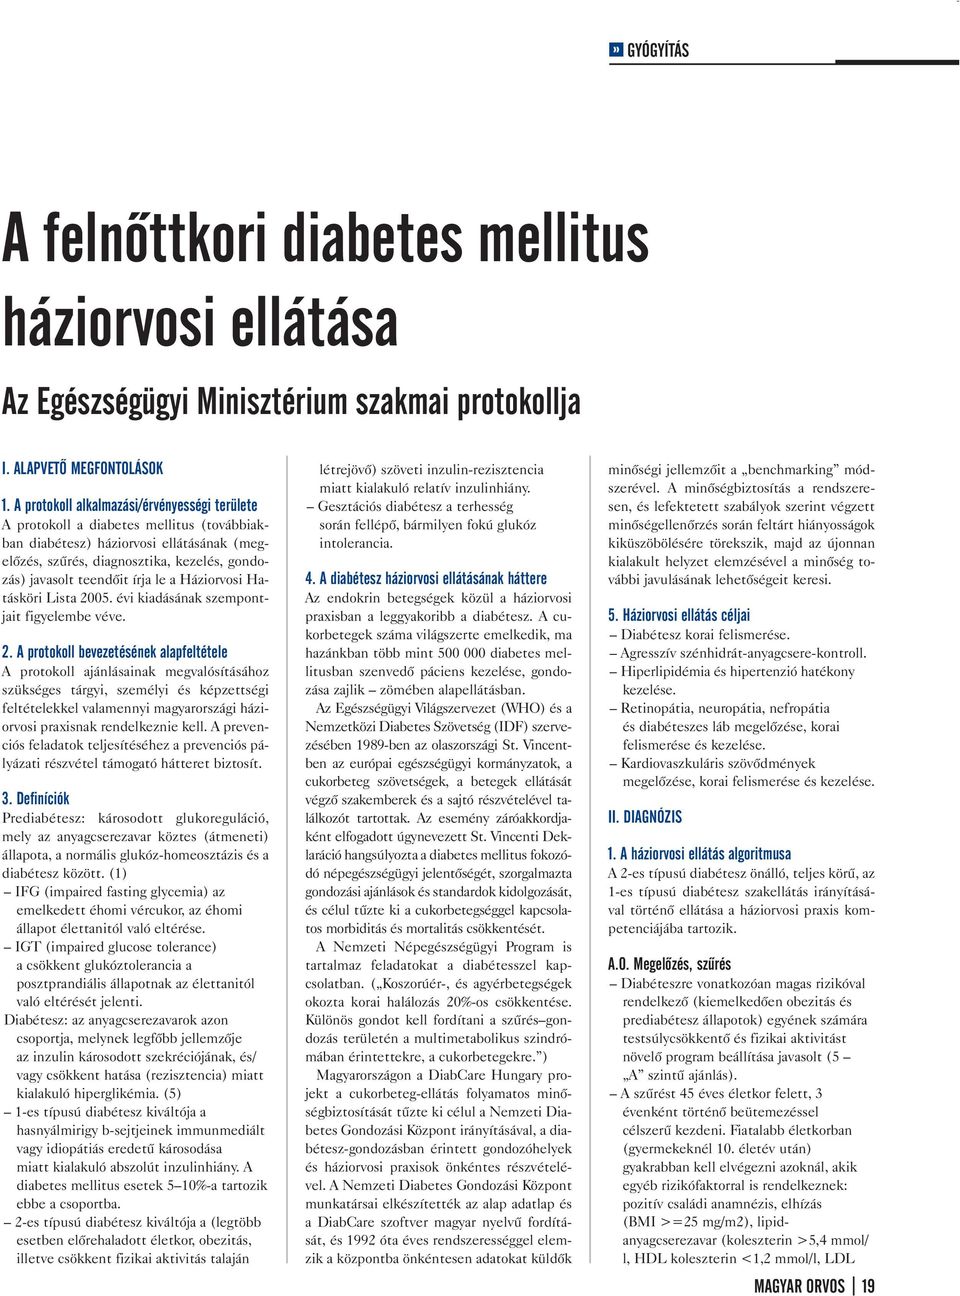 [Model-based economic burden of diabetic retinopathy in Hungary]